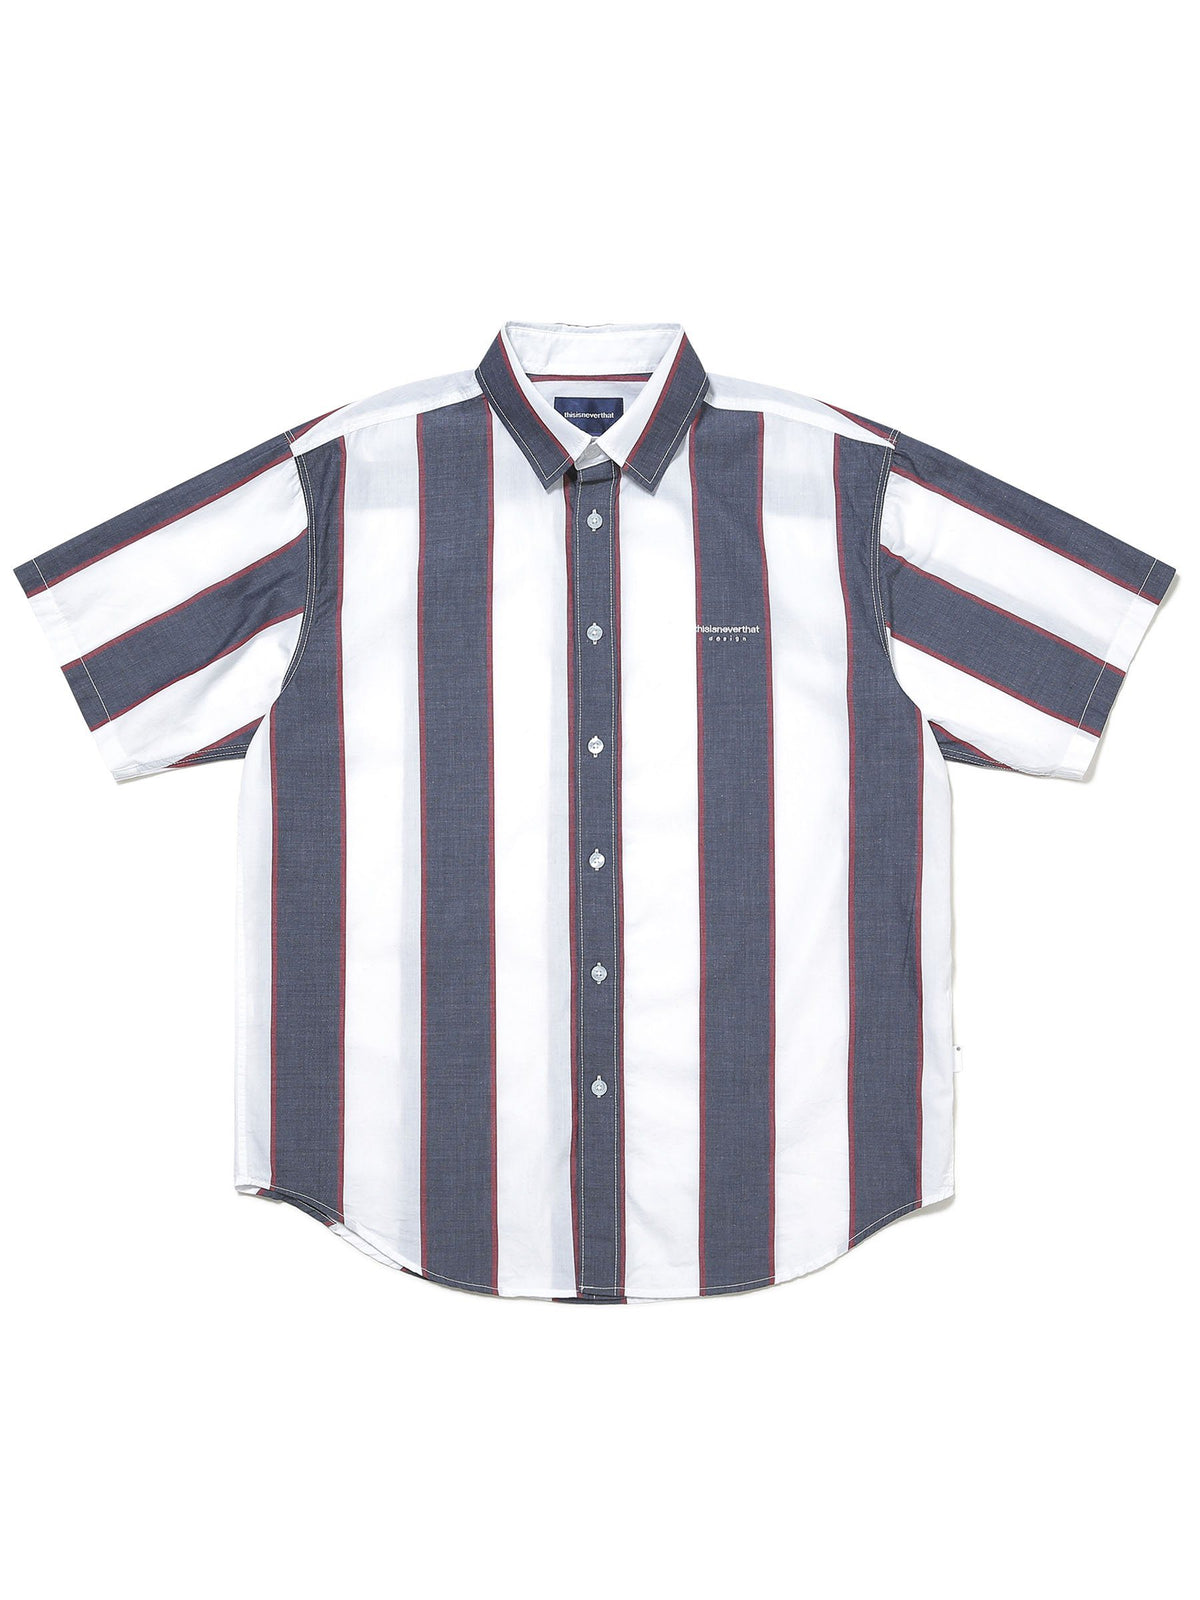 BIG Striped S/S Shirt Shirts 